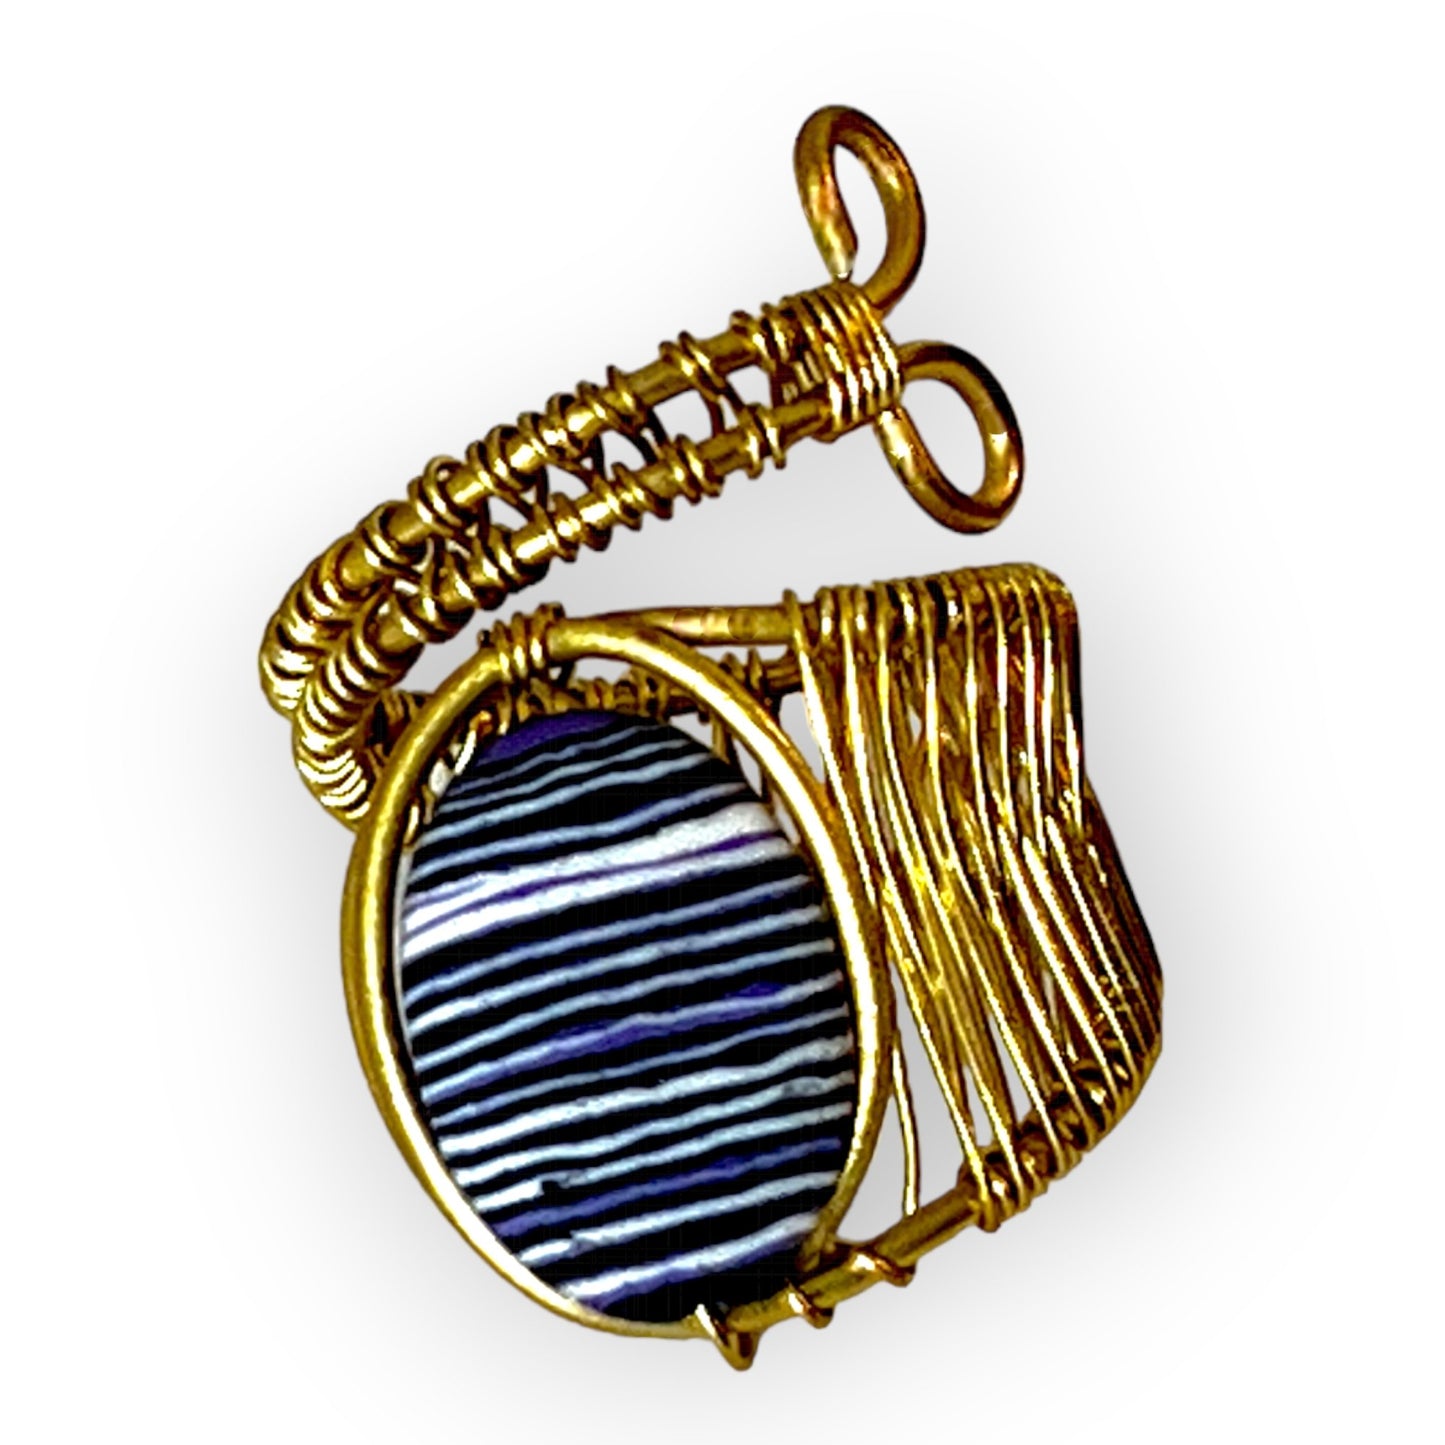 Woven statement ring with blue gemstone - Sundara Joon